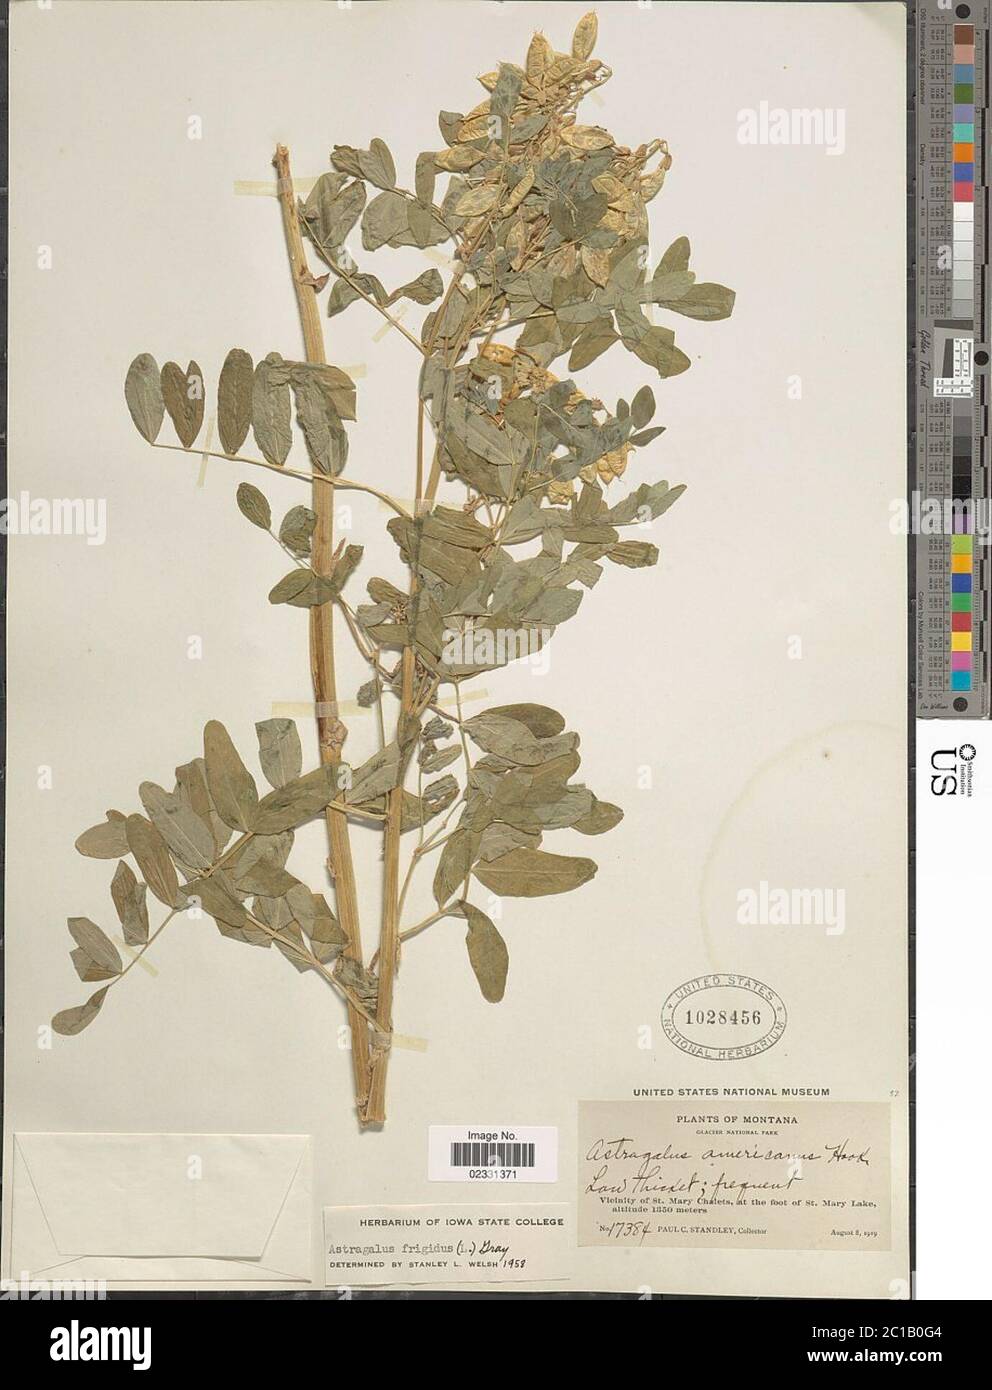 Astragalus frigidus L A Gray Astragalus frigidus L A Gray. Stock Photo